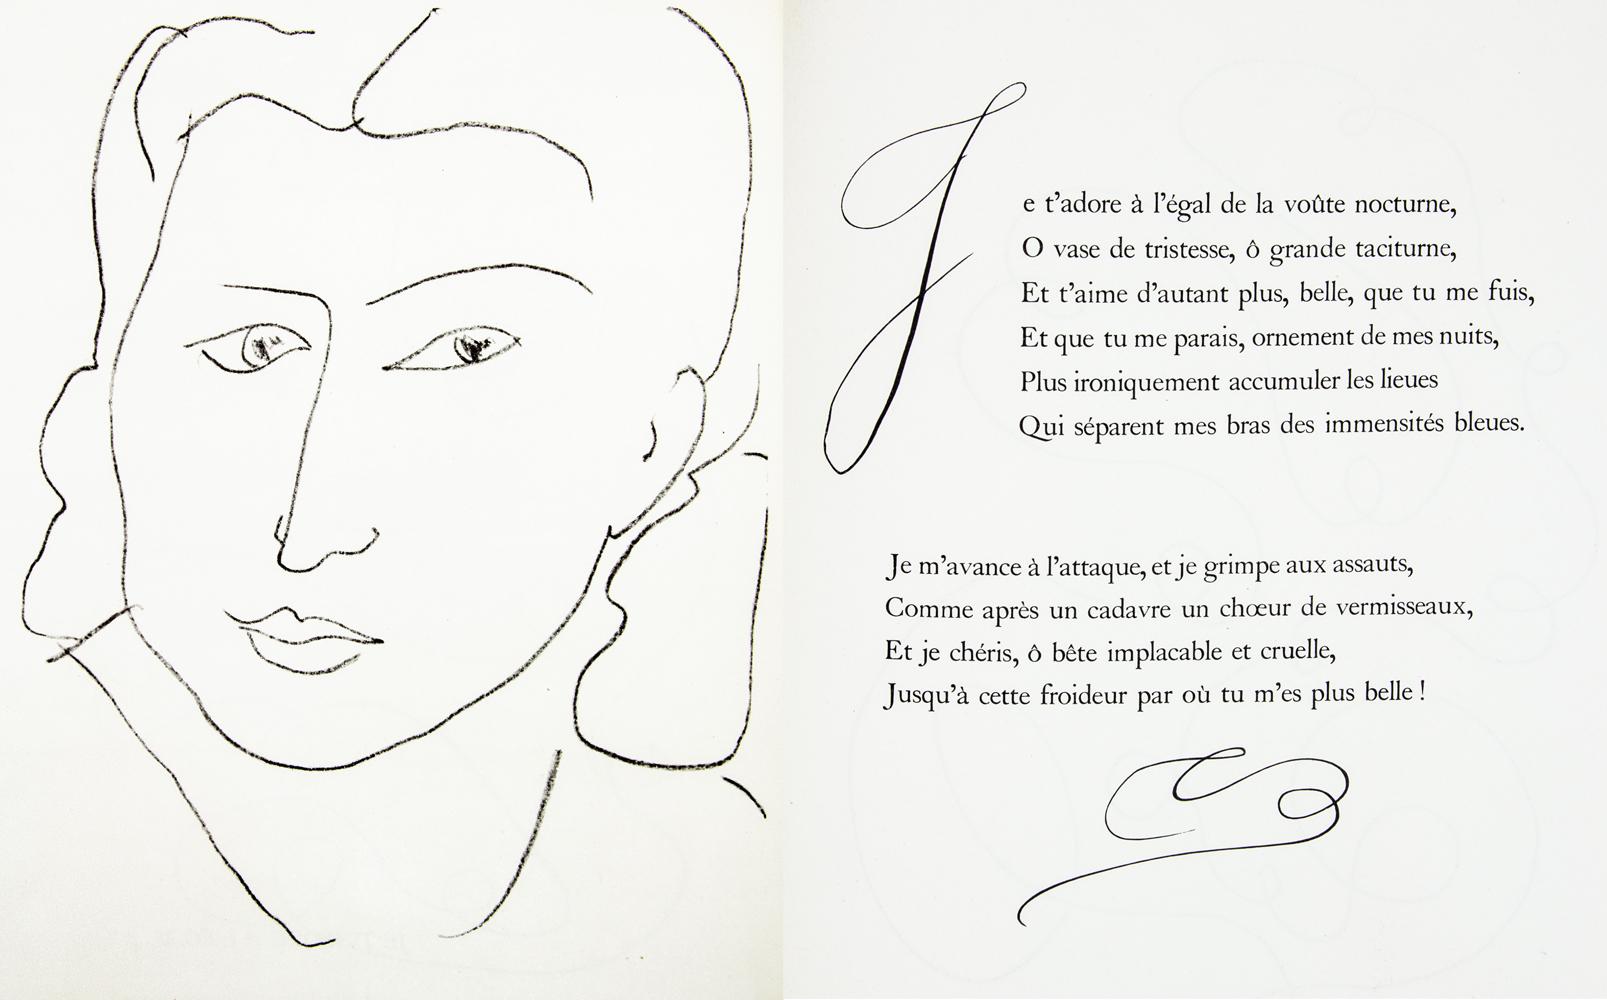  Les Fleurs Du Mal.  By Charles Baudelaire.  - Art by Henri Matisse